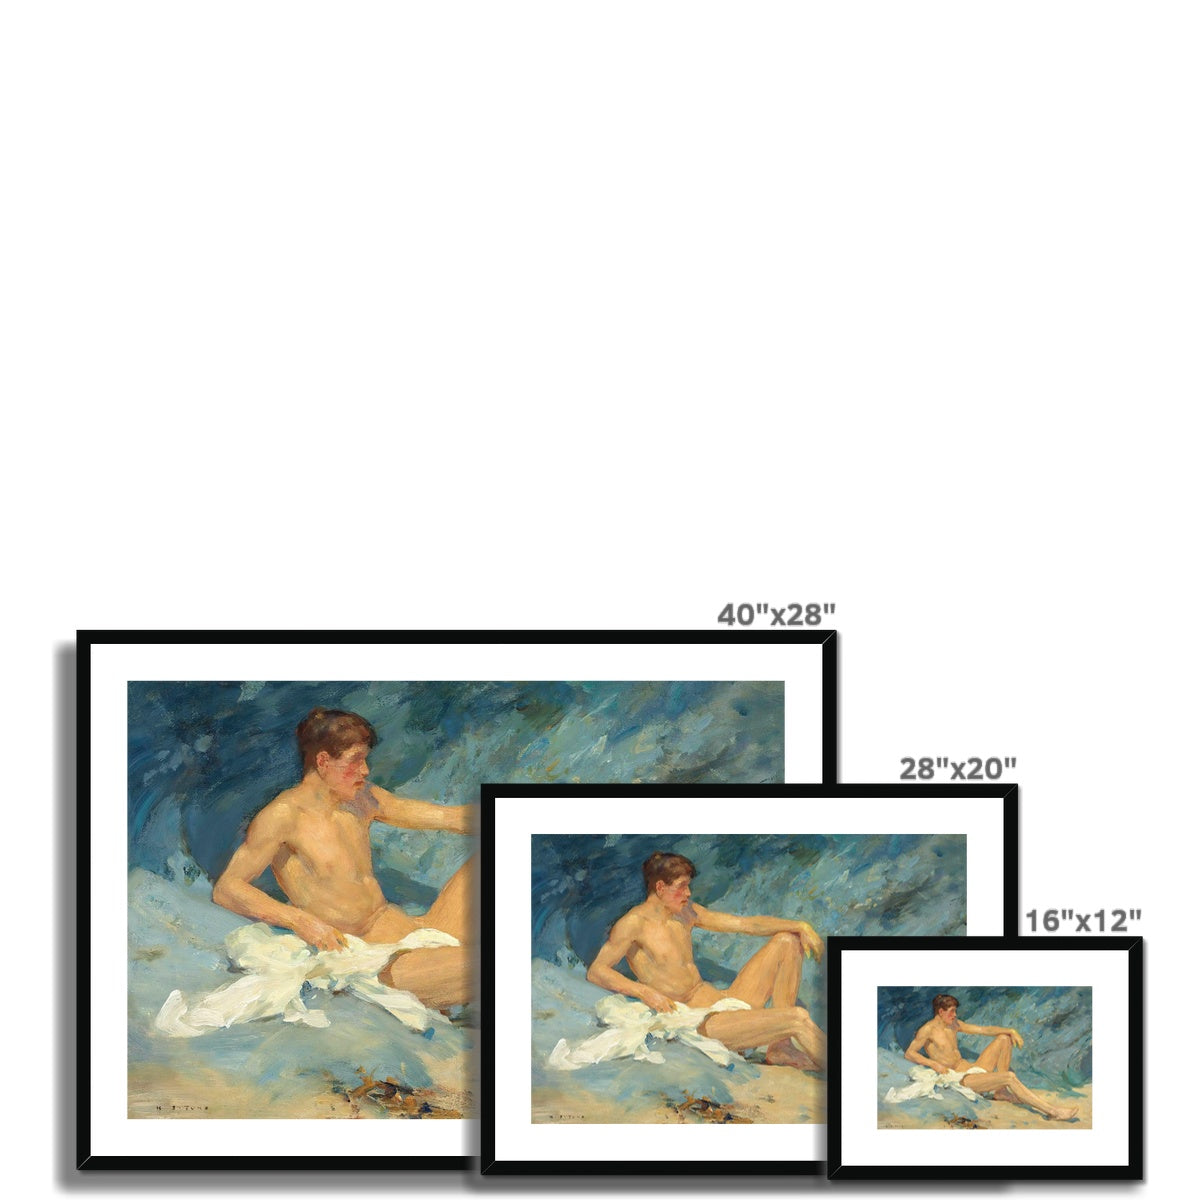 A Male Nude Reclining on the Rocks by Henry Scott Tuke. Framed Open Edition Fine Art Print. Historic Art